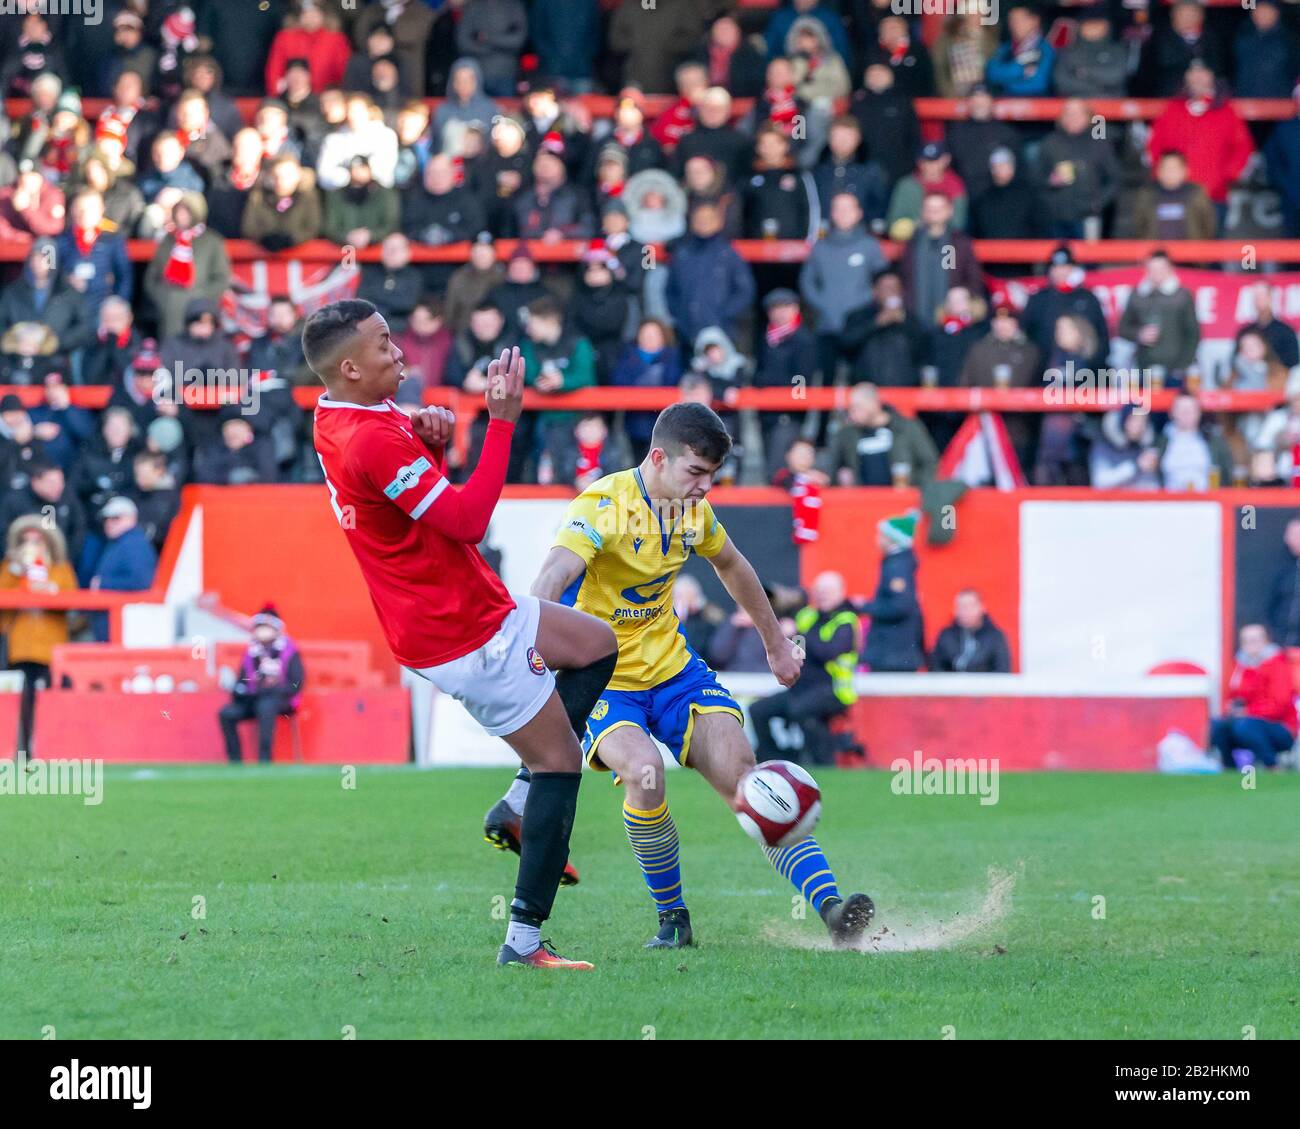 Warrington's Tom Warren kicks the ball past one of the FCUM defenders Stock Photo